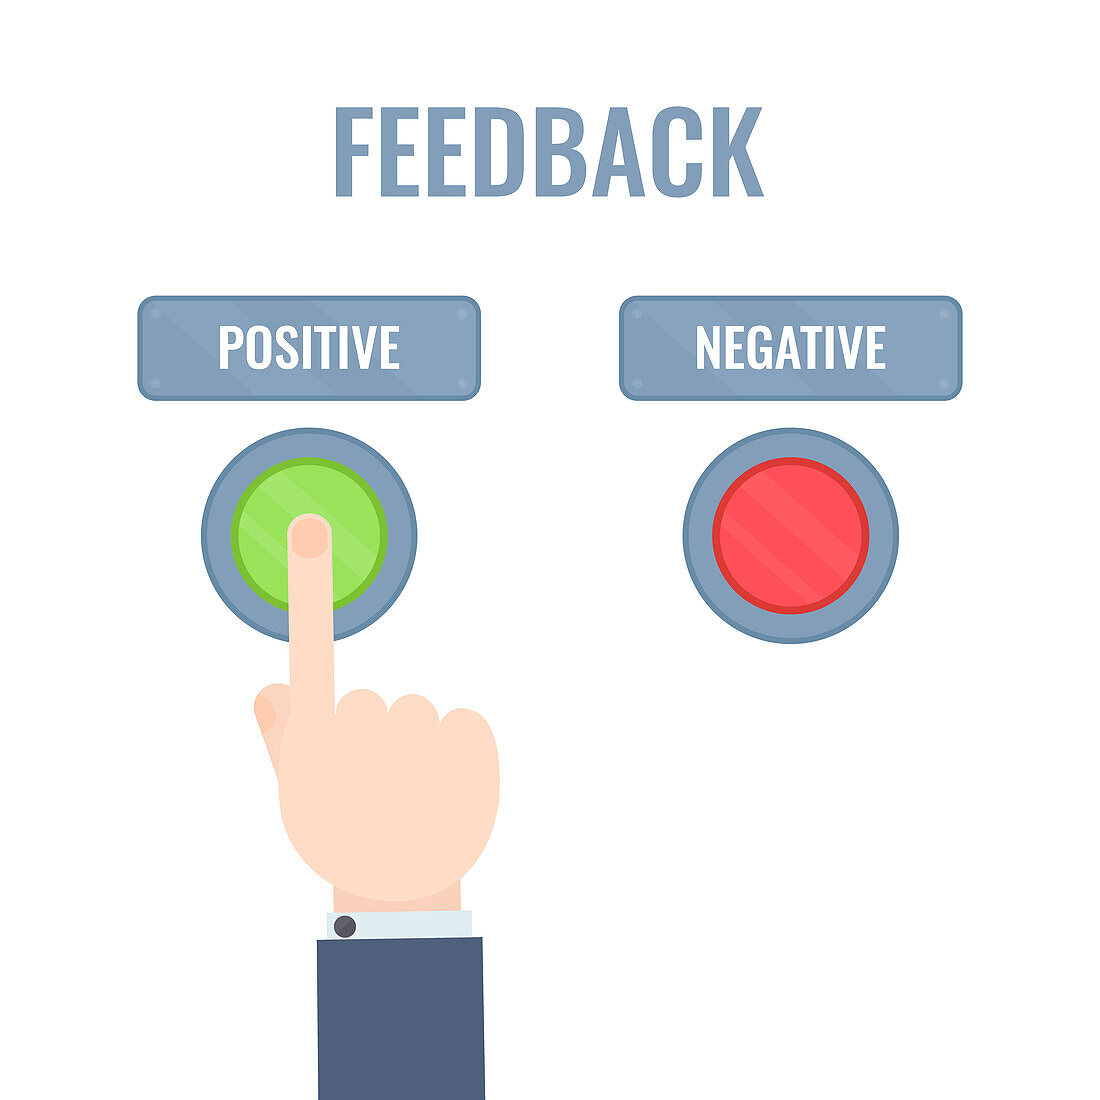 Customer feedback, conceptual illustration